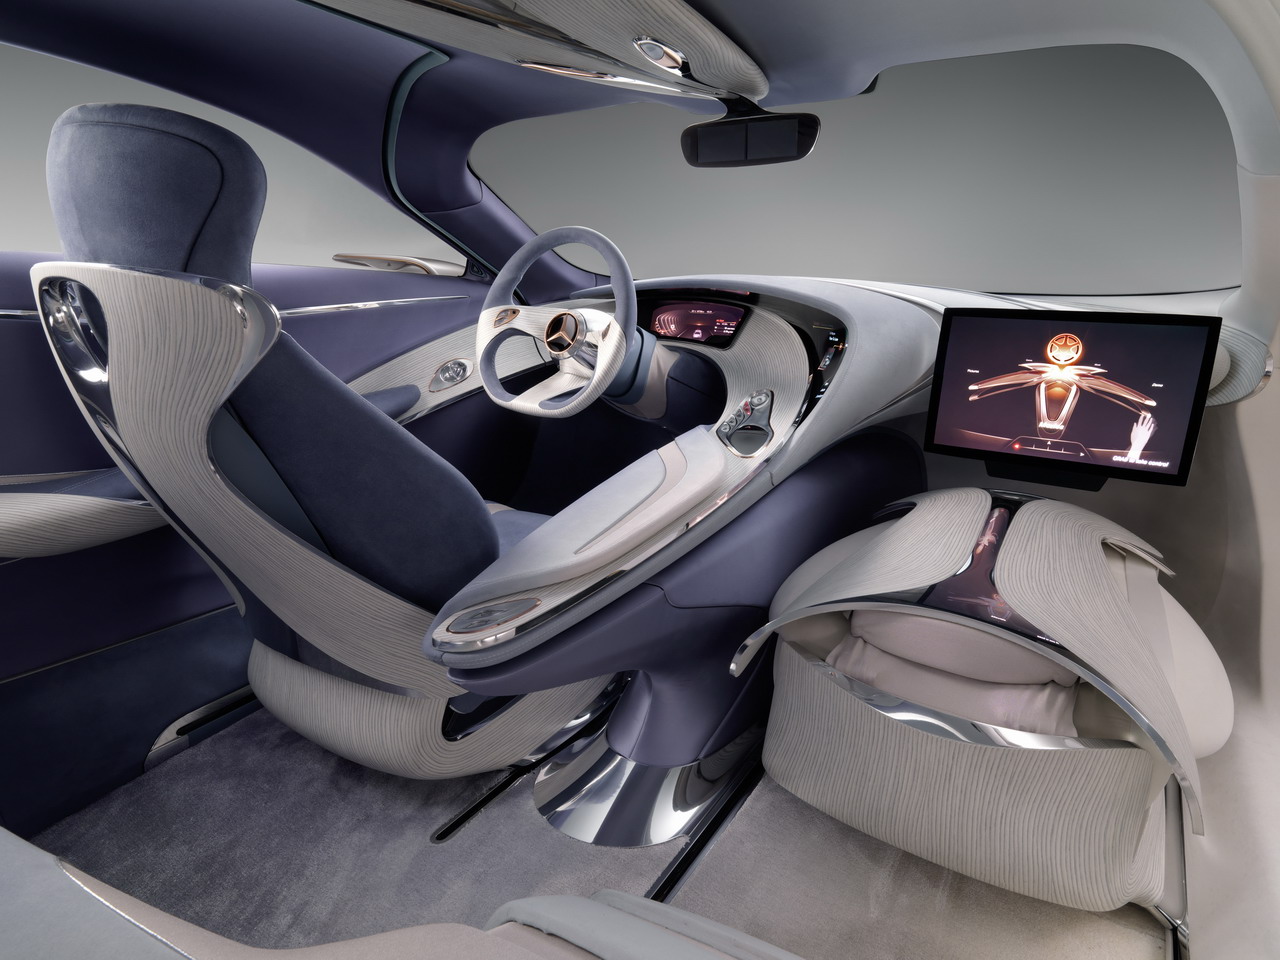 Mercedes Plots Connected Cars Facebook Ar Car Sharing Apps Slashgear